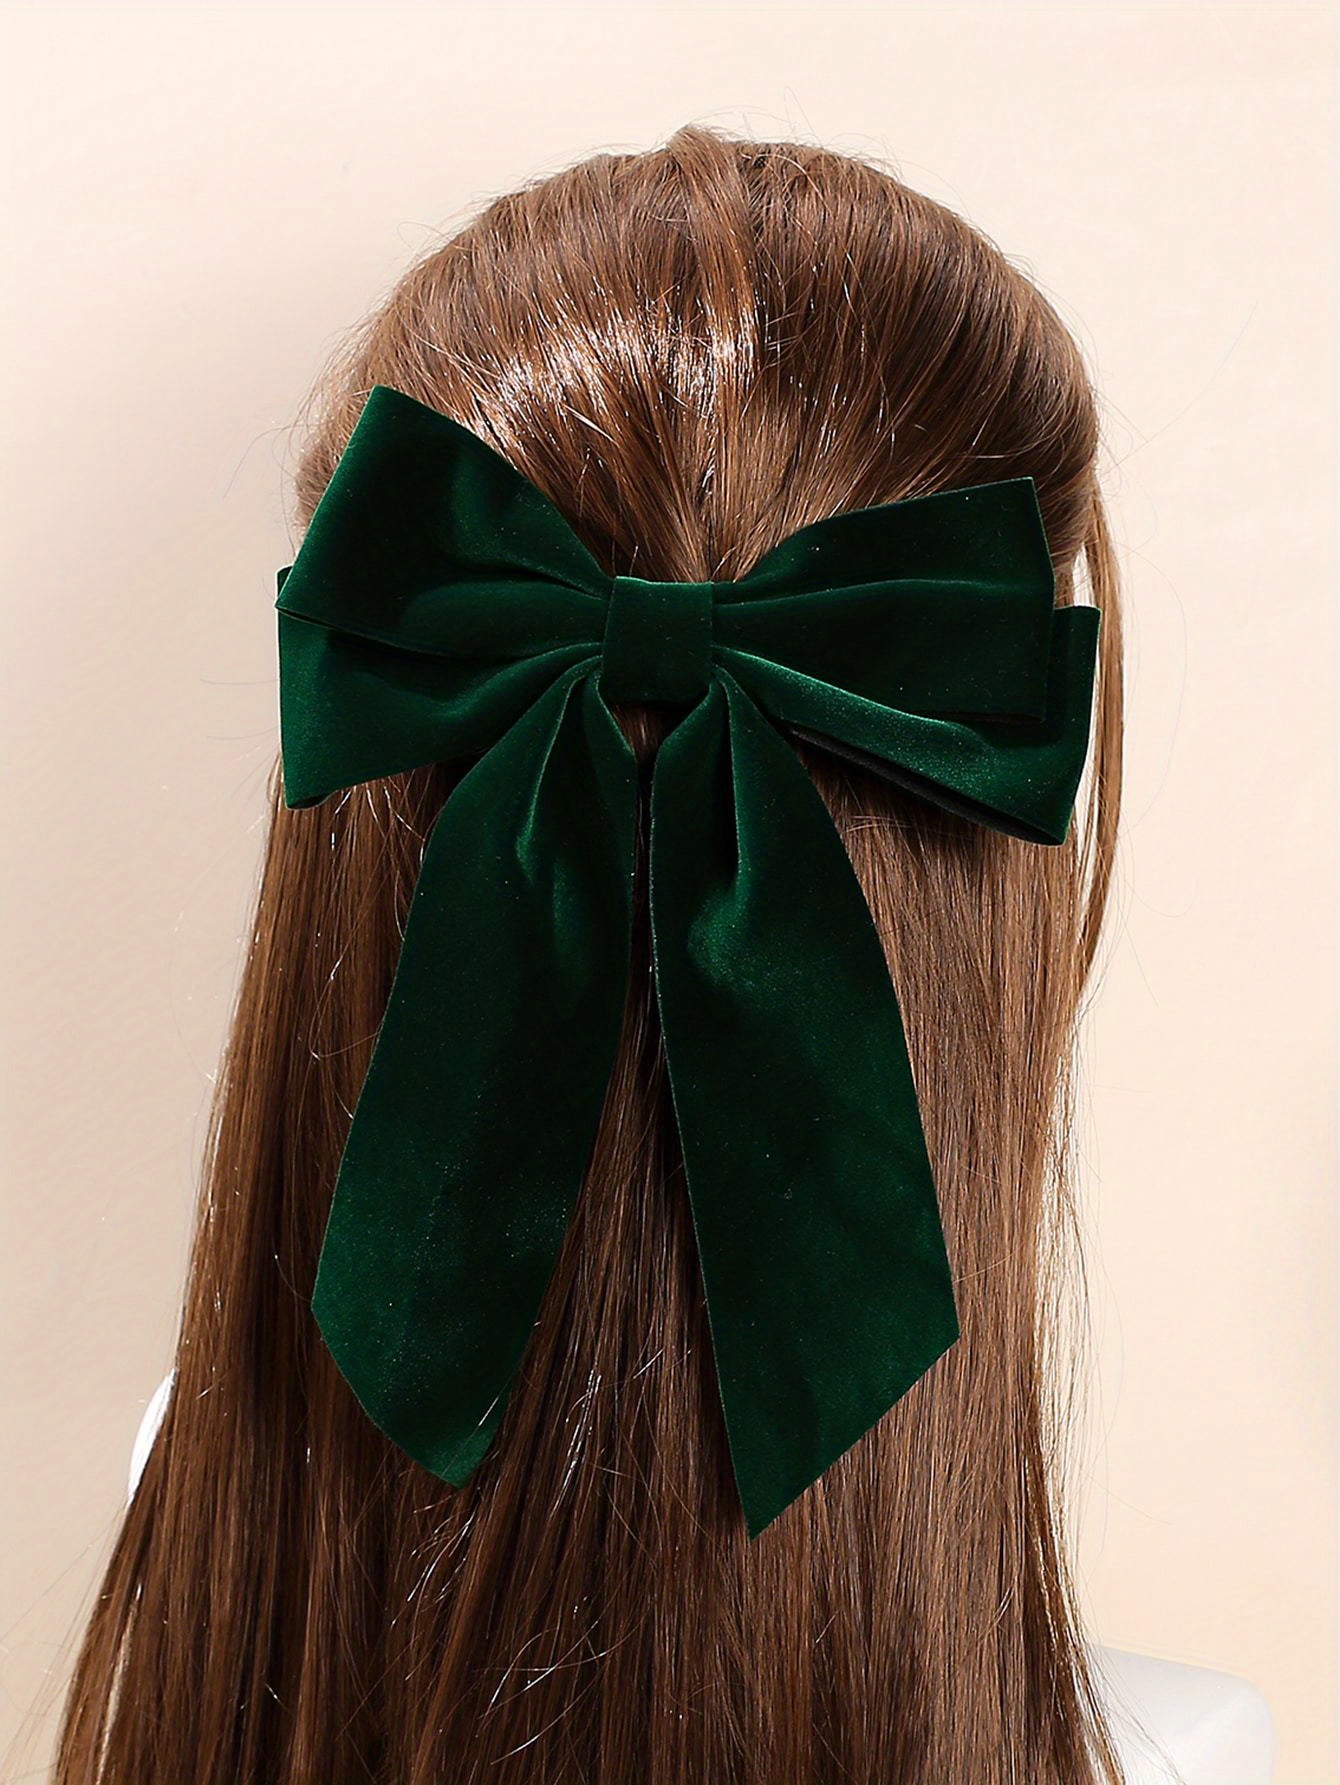 CHANEL Ribbon Hair Accessory Head Band Satin Black x Dark Green